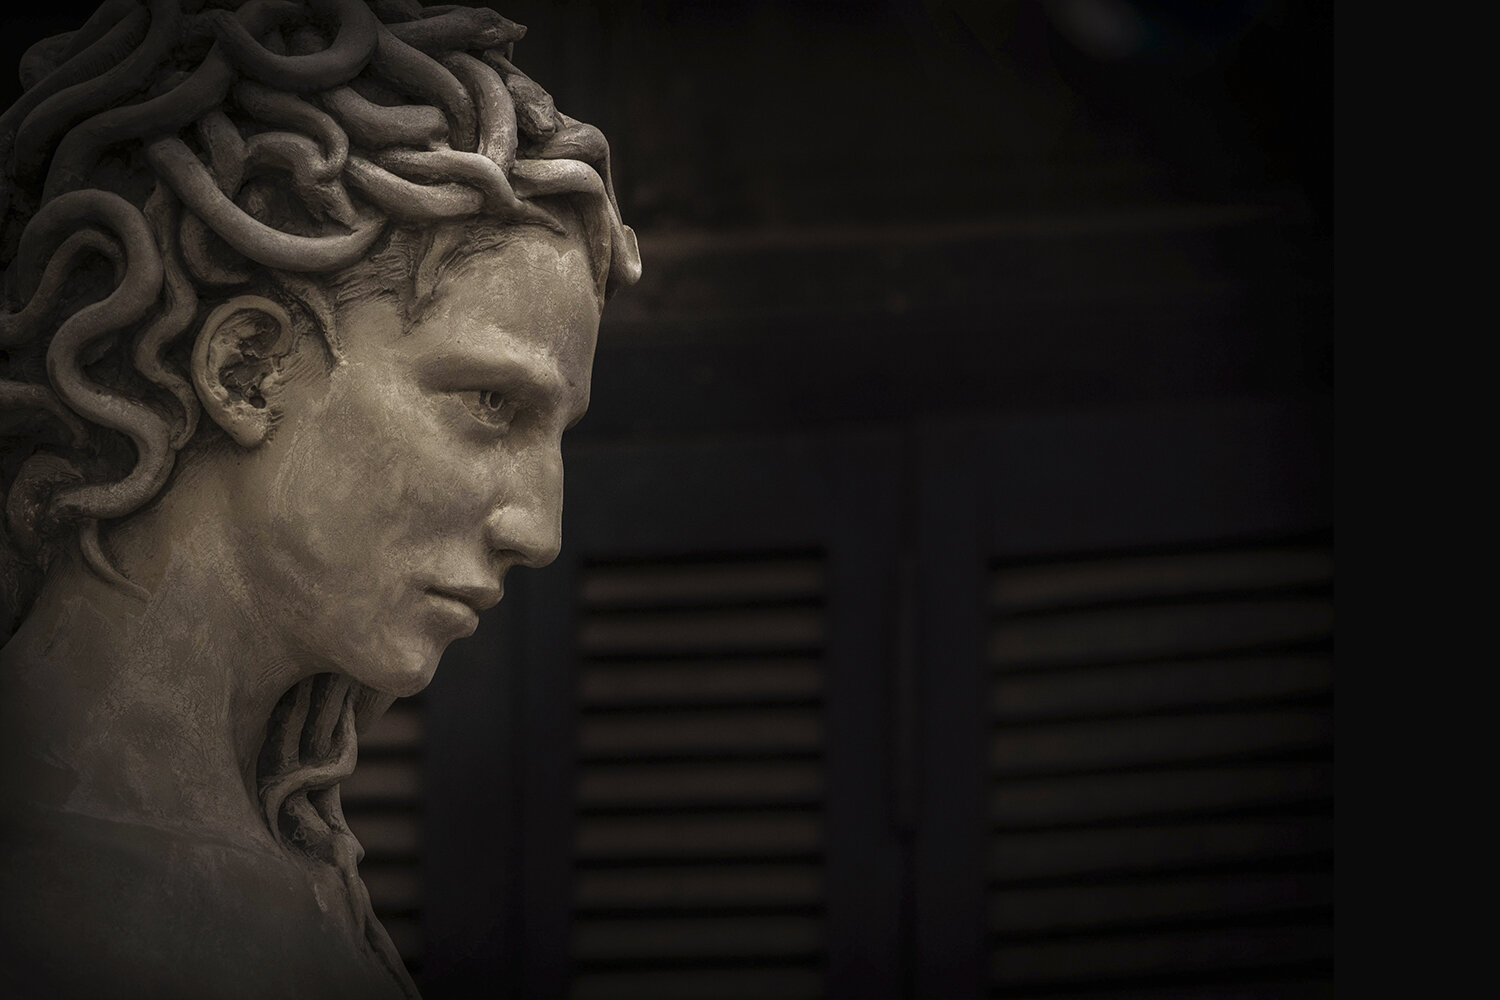 Luciano Garbati’s Medusa With the Head of Perseus